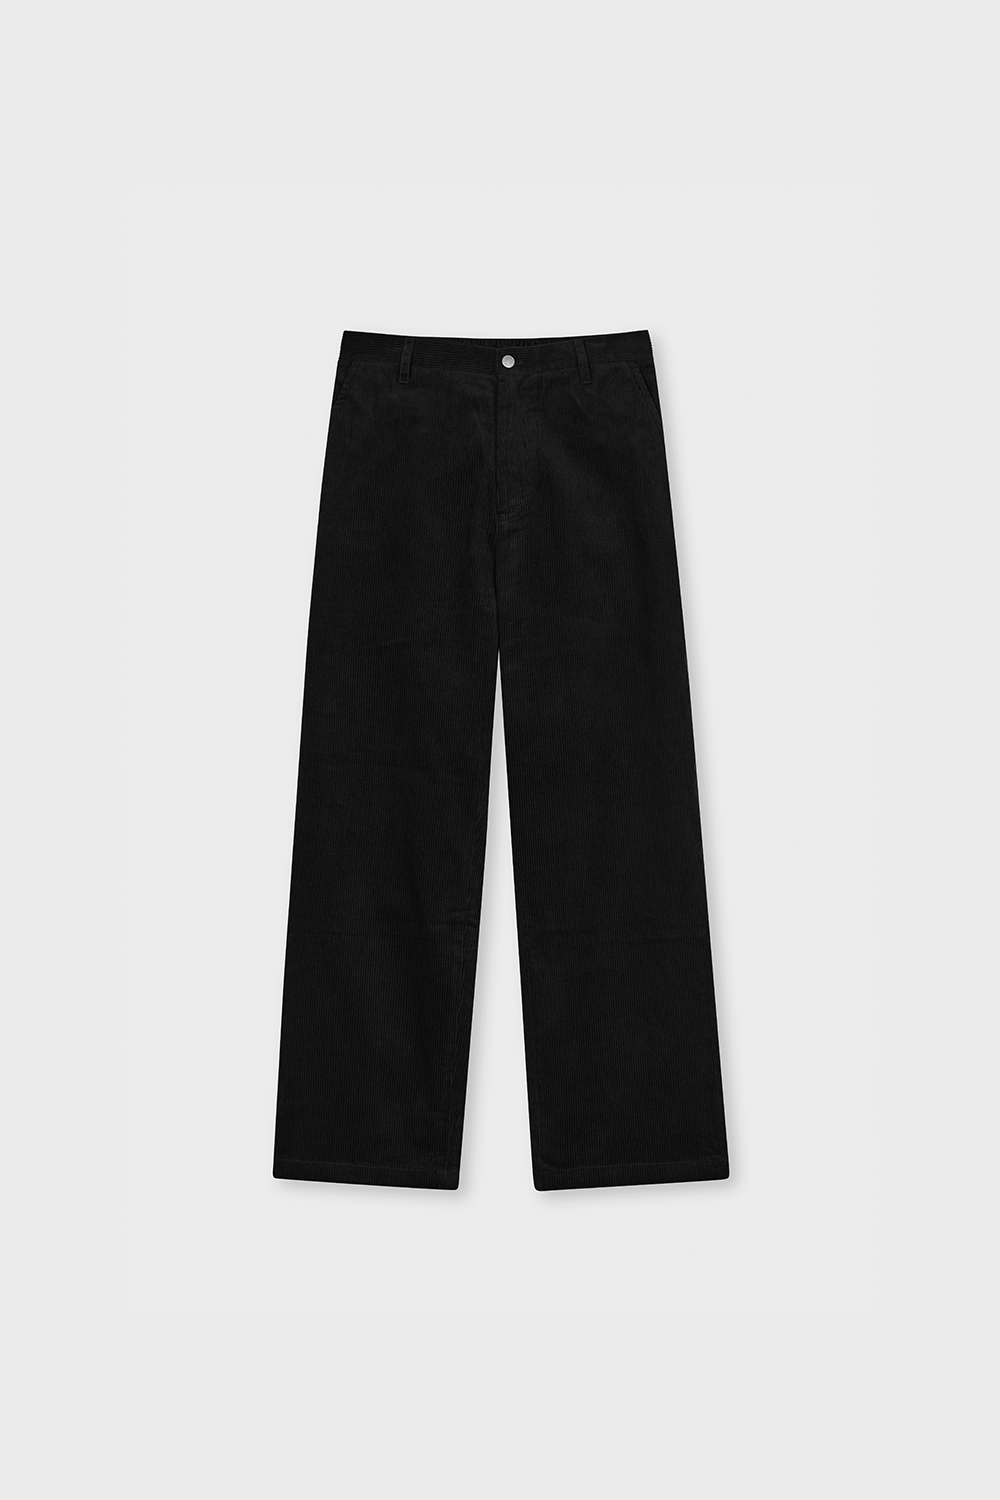 High Density Corduroy Pants (Black)